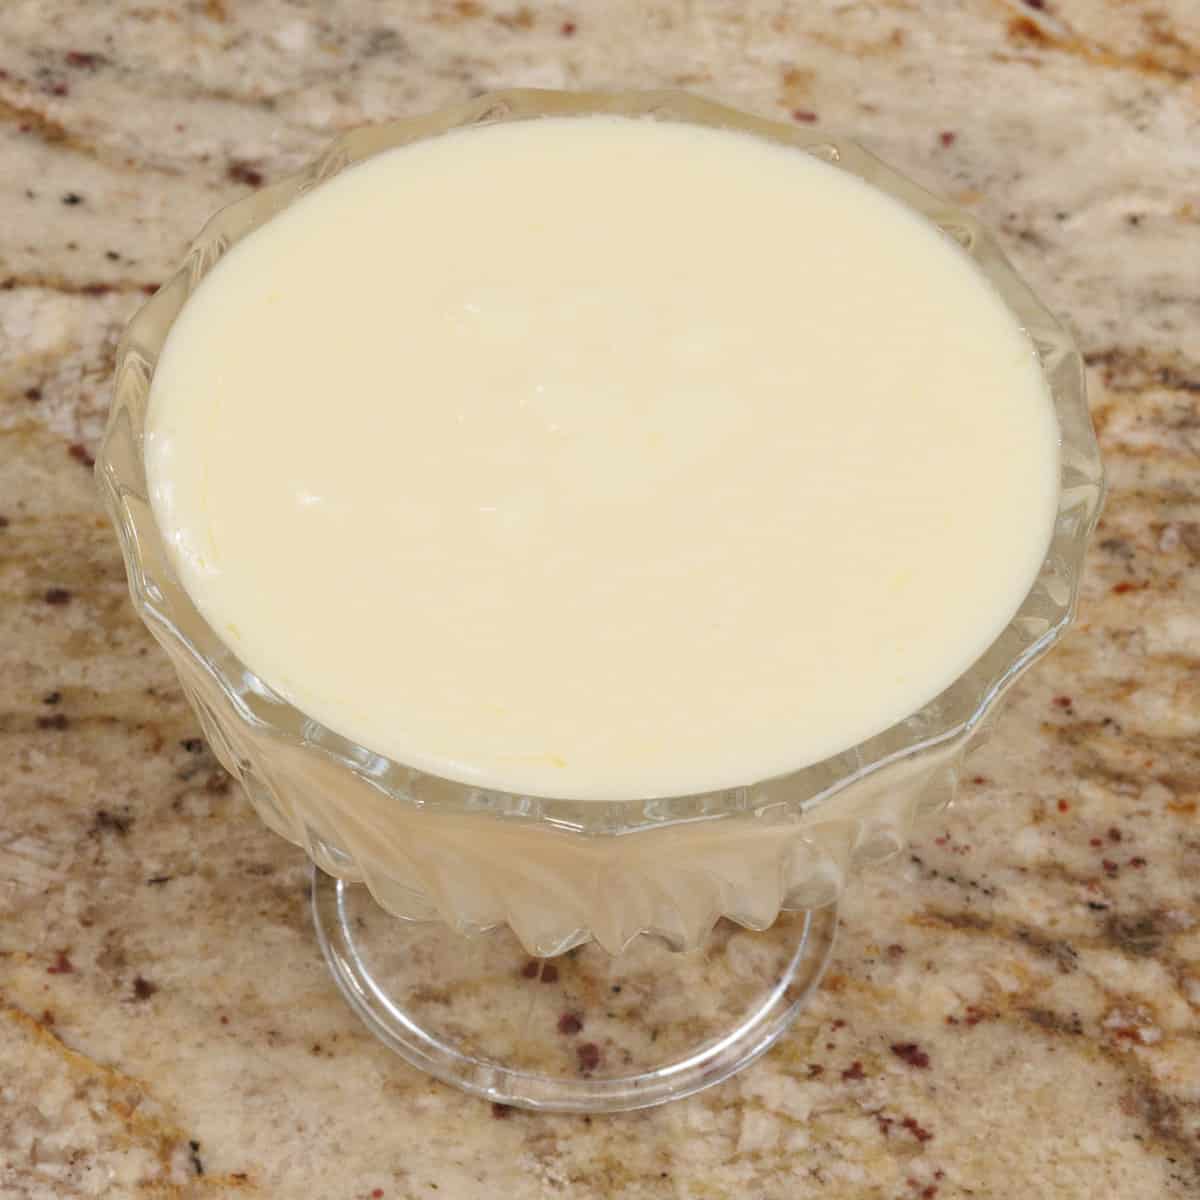 homemade vanilla pudding in a dessert bowl